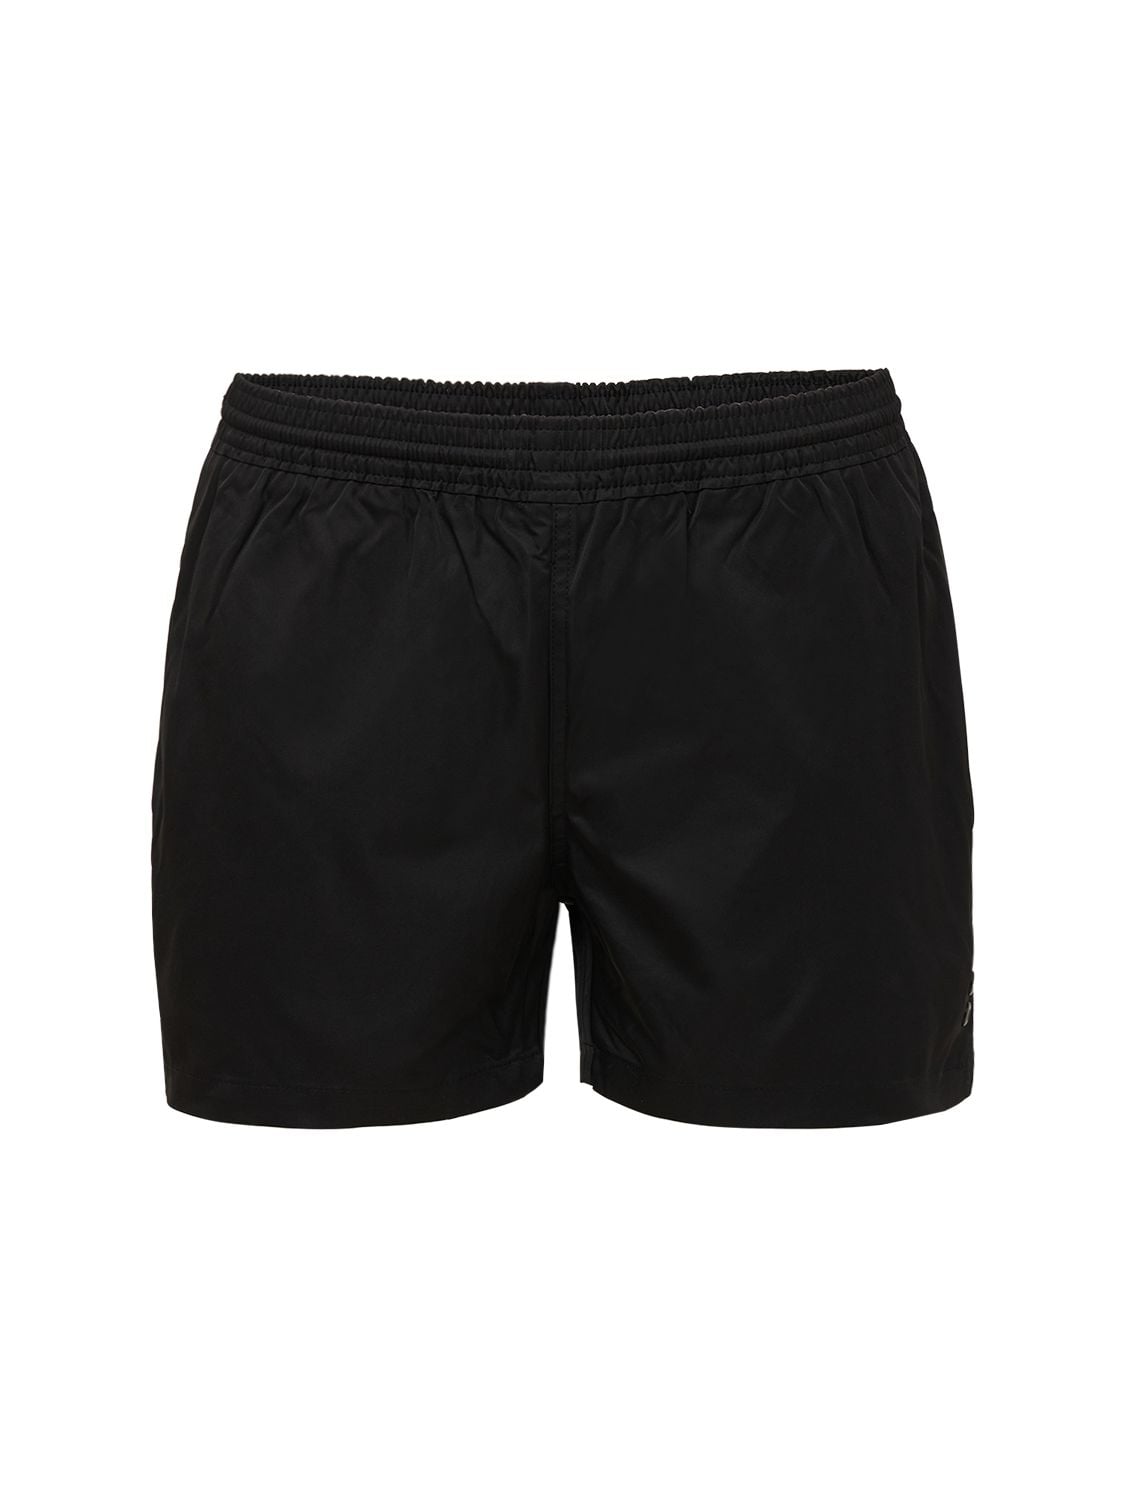 RON DORFF Exerciser Nylon Shorts